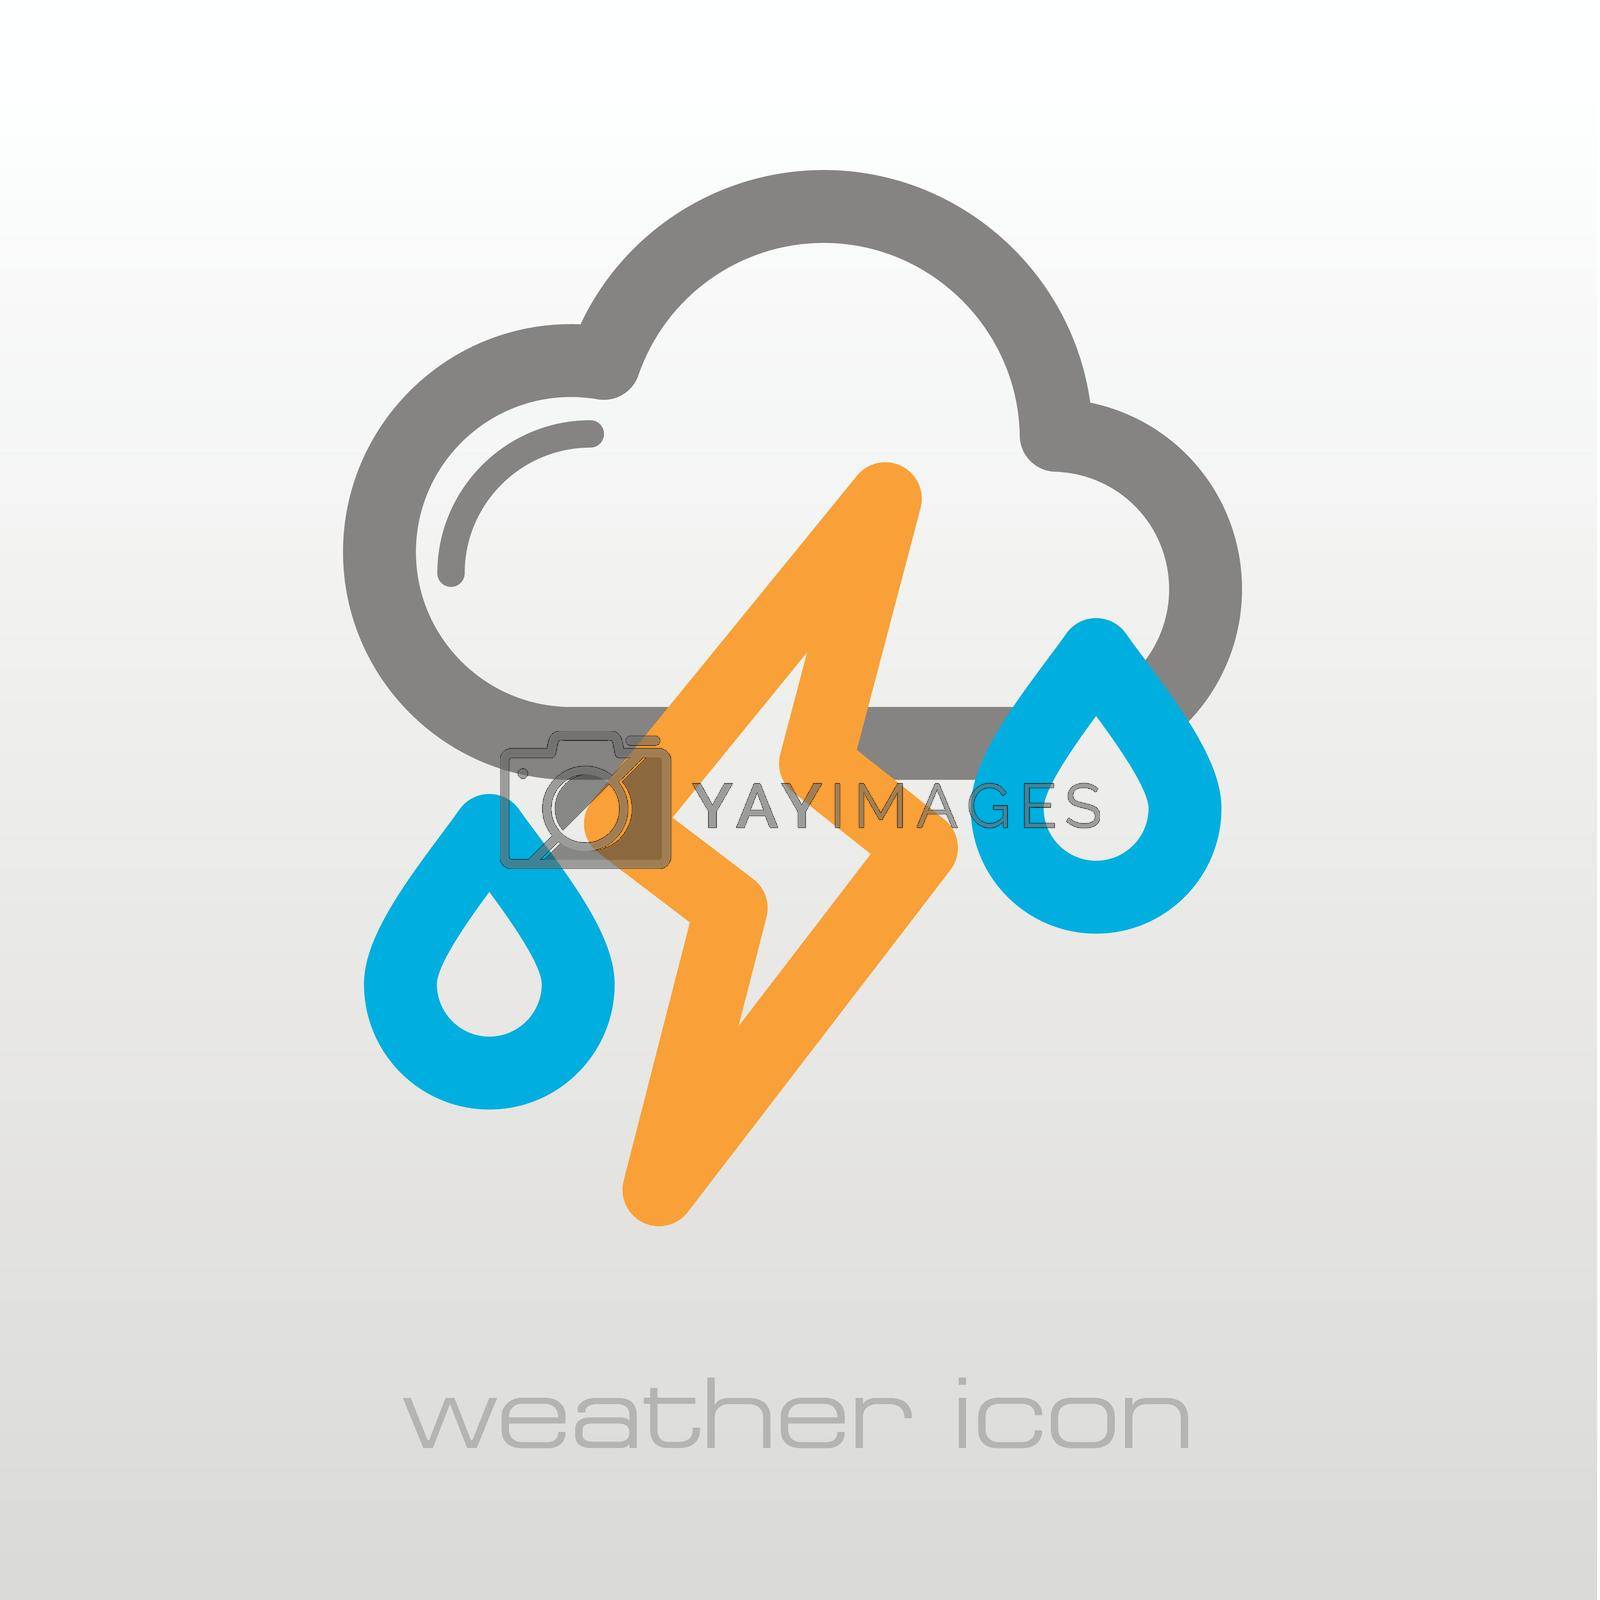 Cloud Rain Lightning outline icon. Meteorology. Weather. Vector illustration eps 10